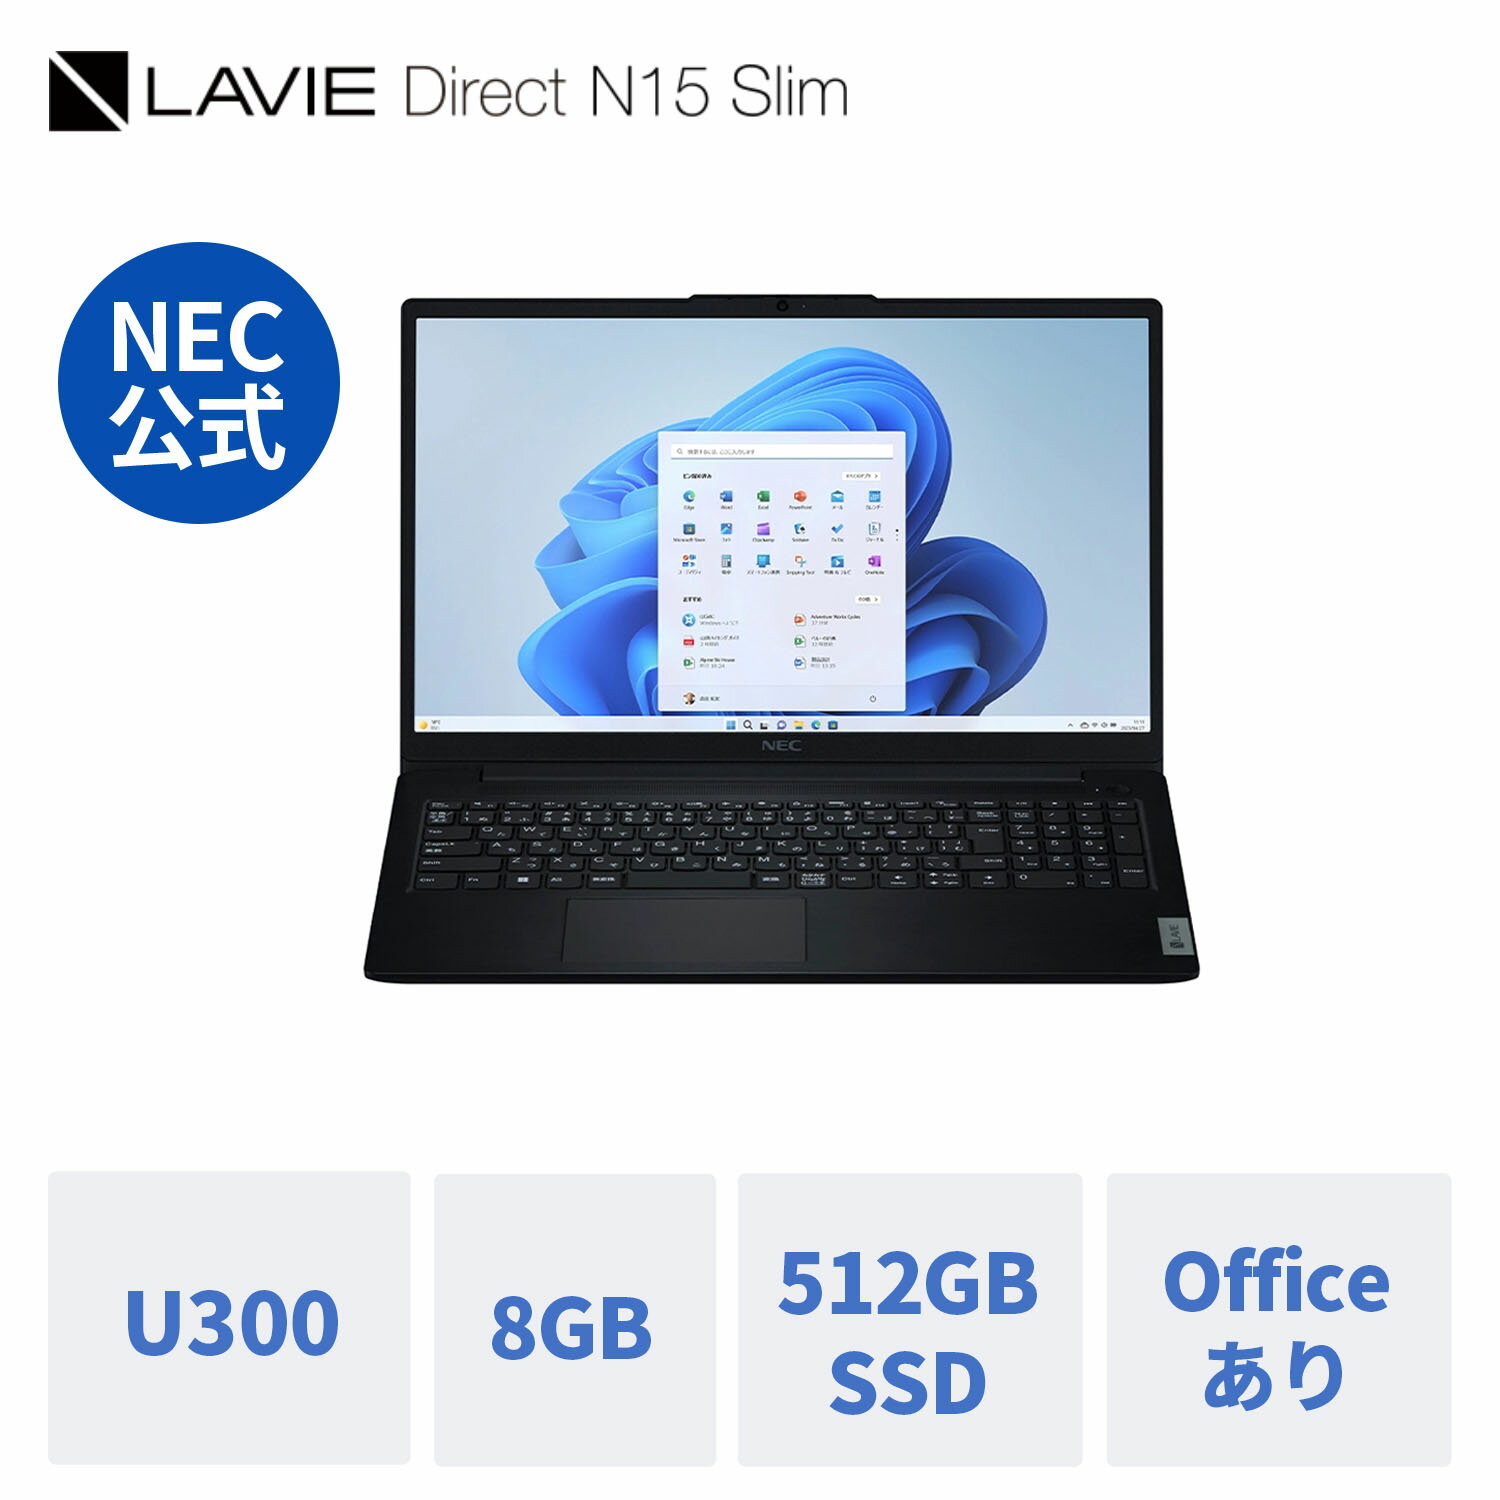 【Norton1】【DEAL10 】【8,000円OFFクーポン】【公式】 新品 NEC ノートパソコン office付き LAVIE Direct N15 Slim 15.6インチ Windows 11 Home Intel Processor U300 メモリ 8GB 512GB SSD 1年保証 送料無料 yxe